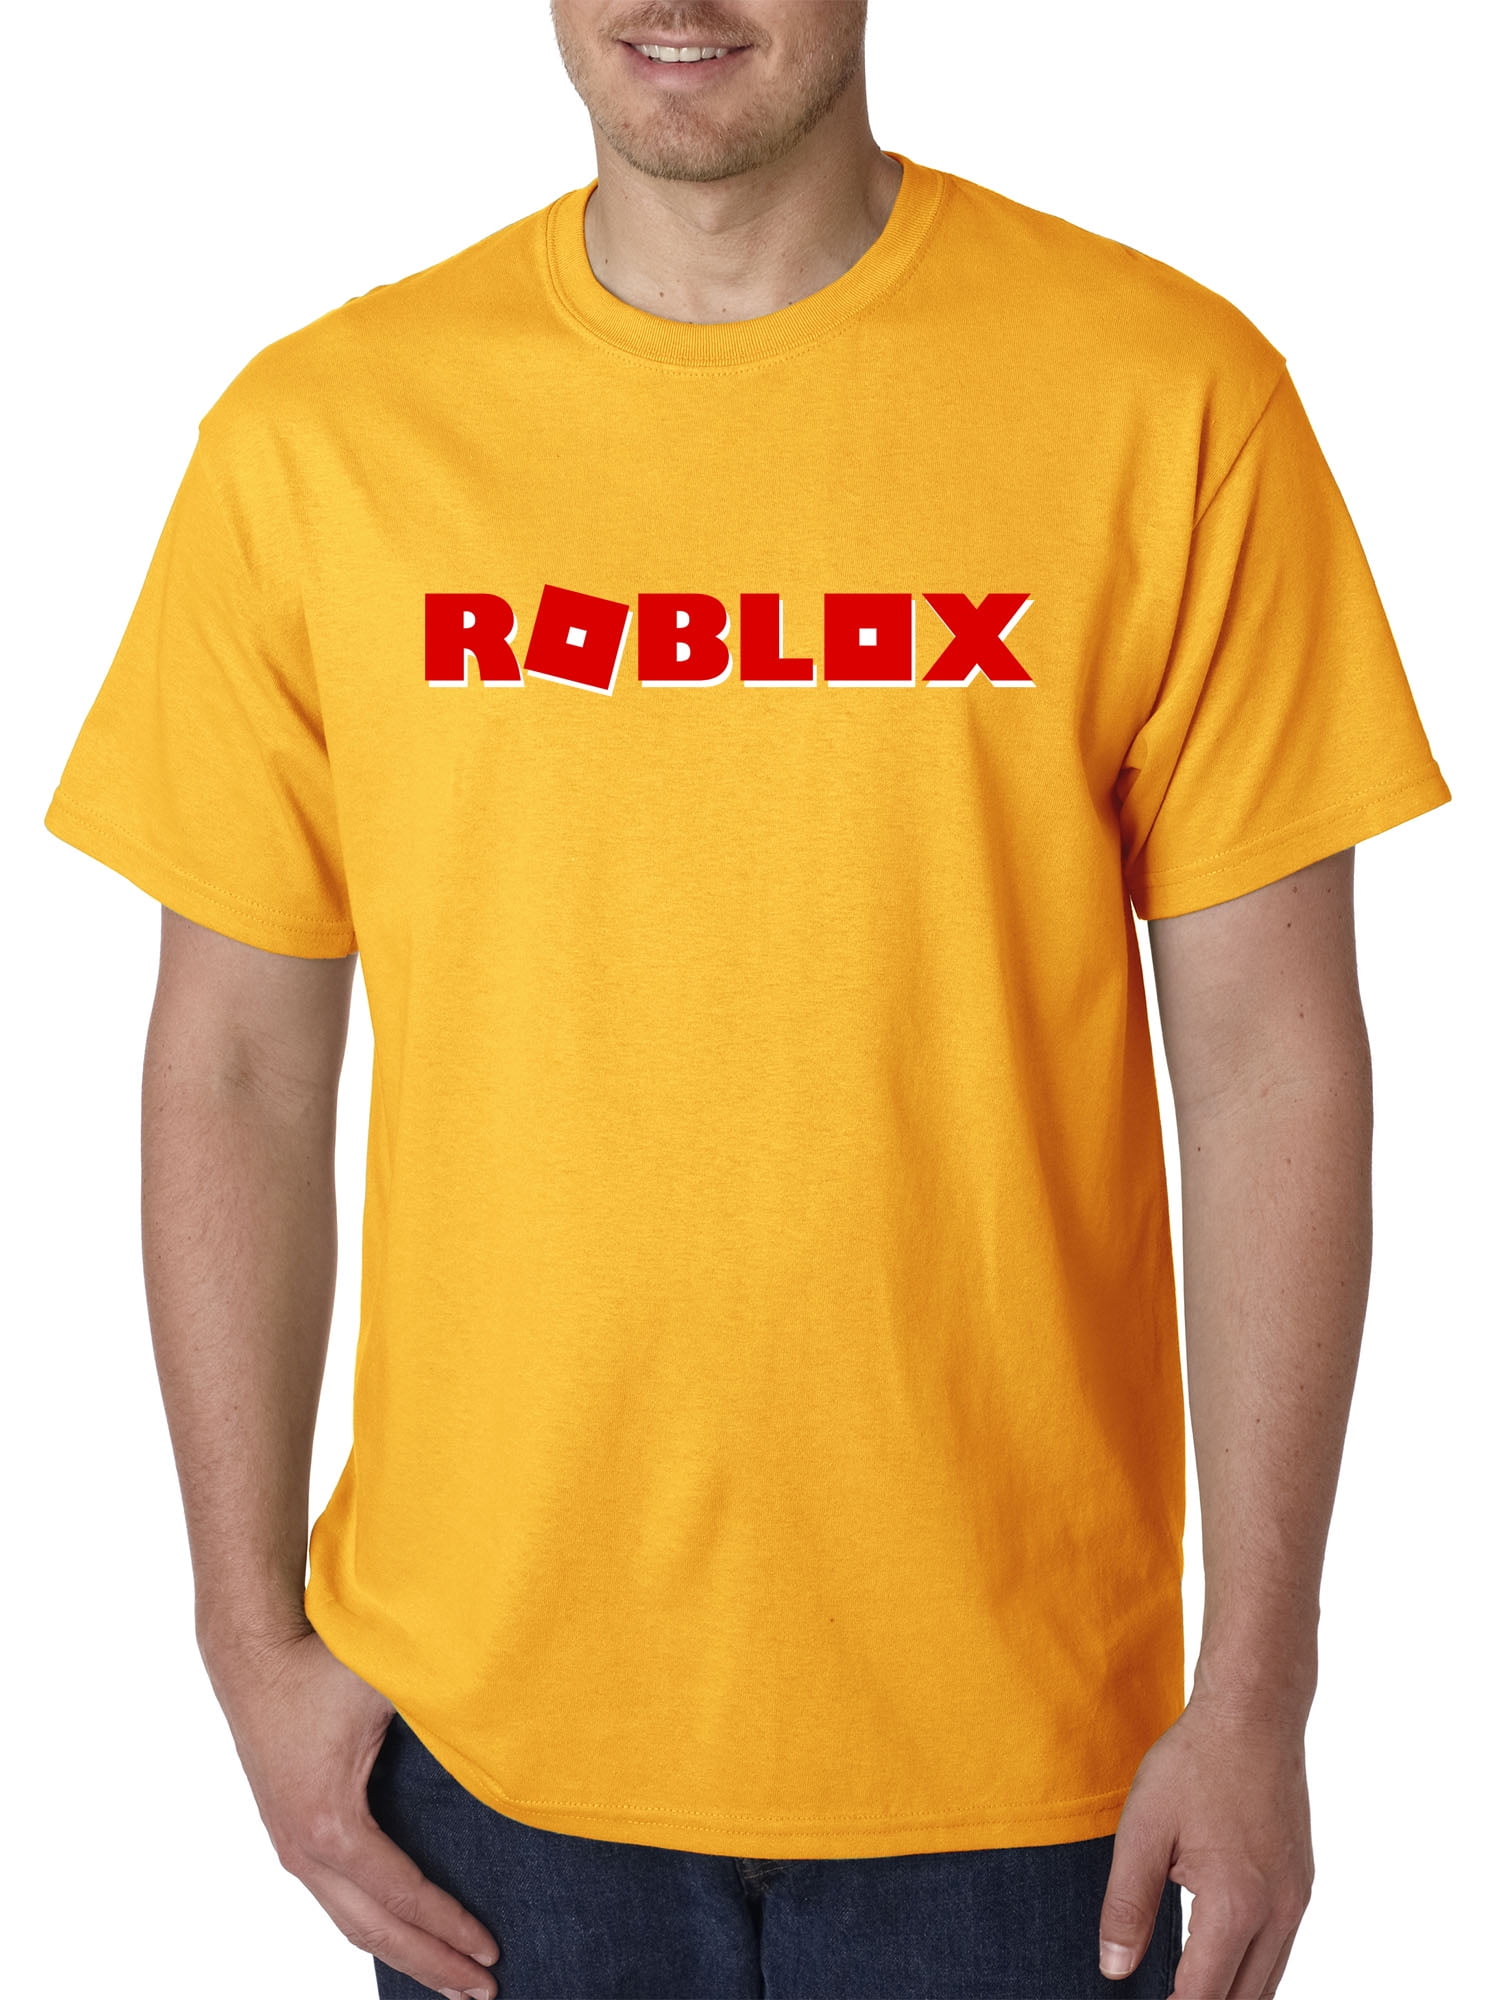 New Way New Way 922 Unisex T Shirt Roblox Logo Game Filled Small Gold Walmart Com - golden shirt t shirt free version roblox